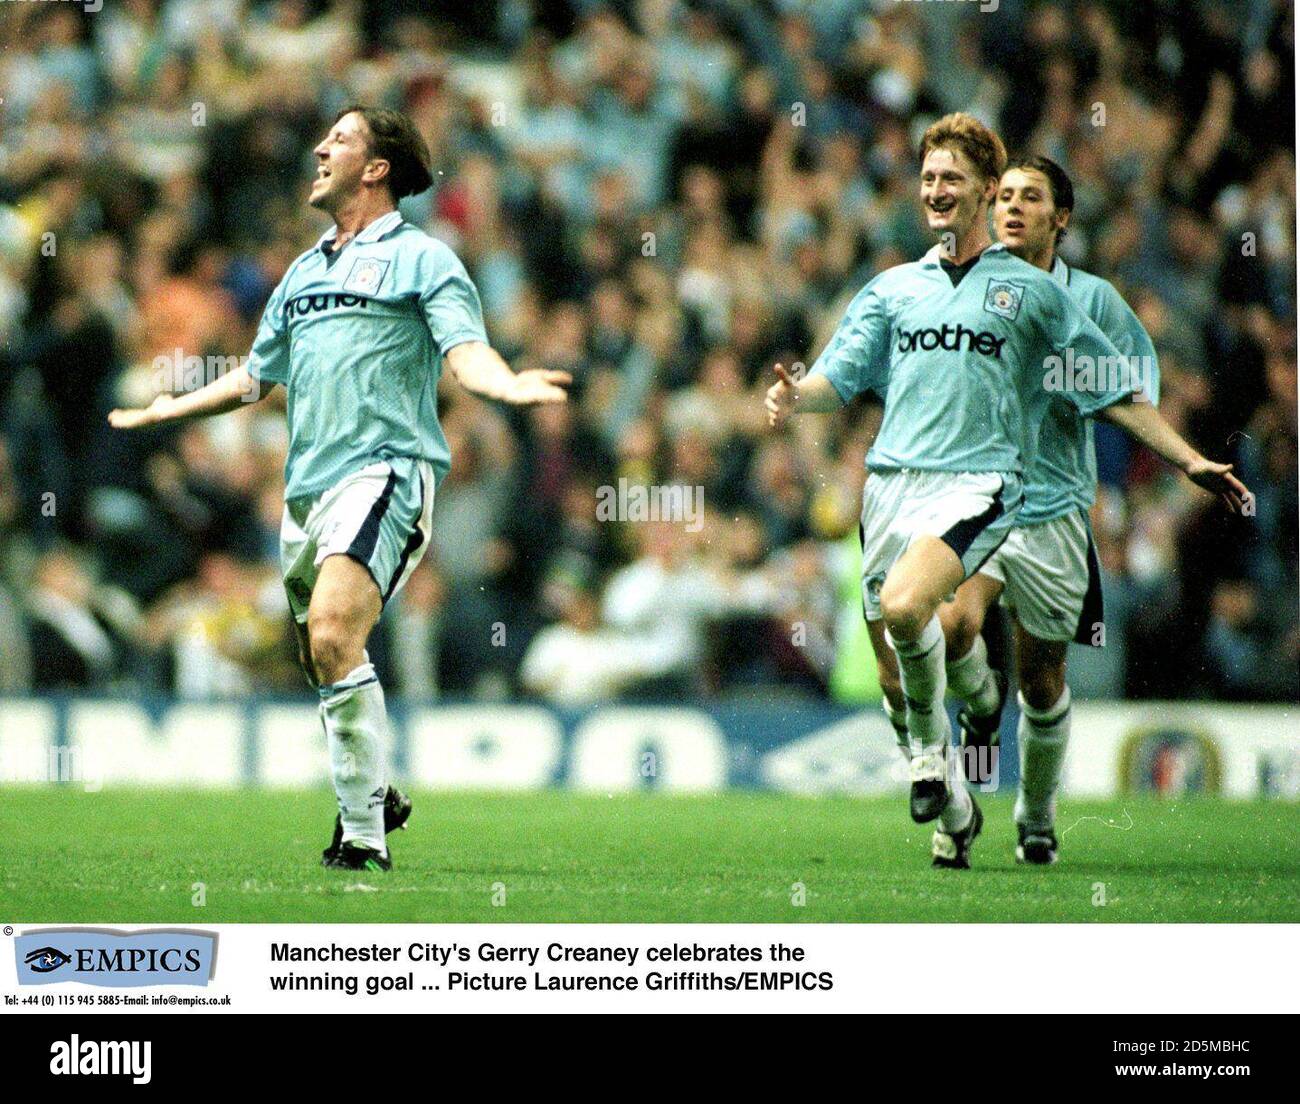 Gerry Creaney de Manchester City celebra el gol ganador... Imagen Laurence Griffiths/EMPICS Foto de stock